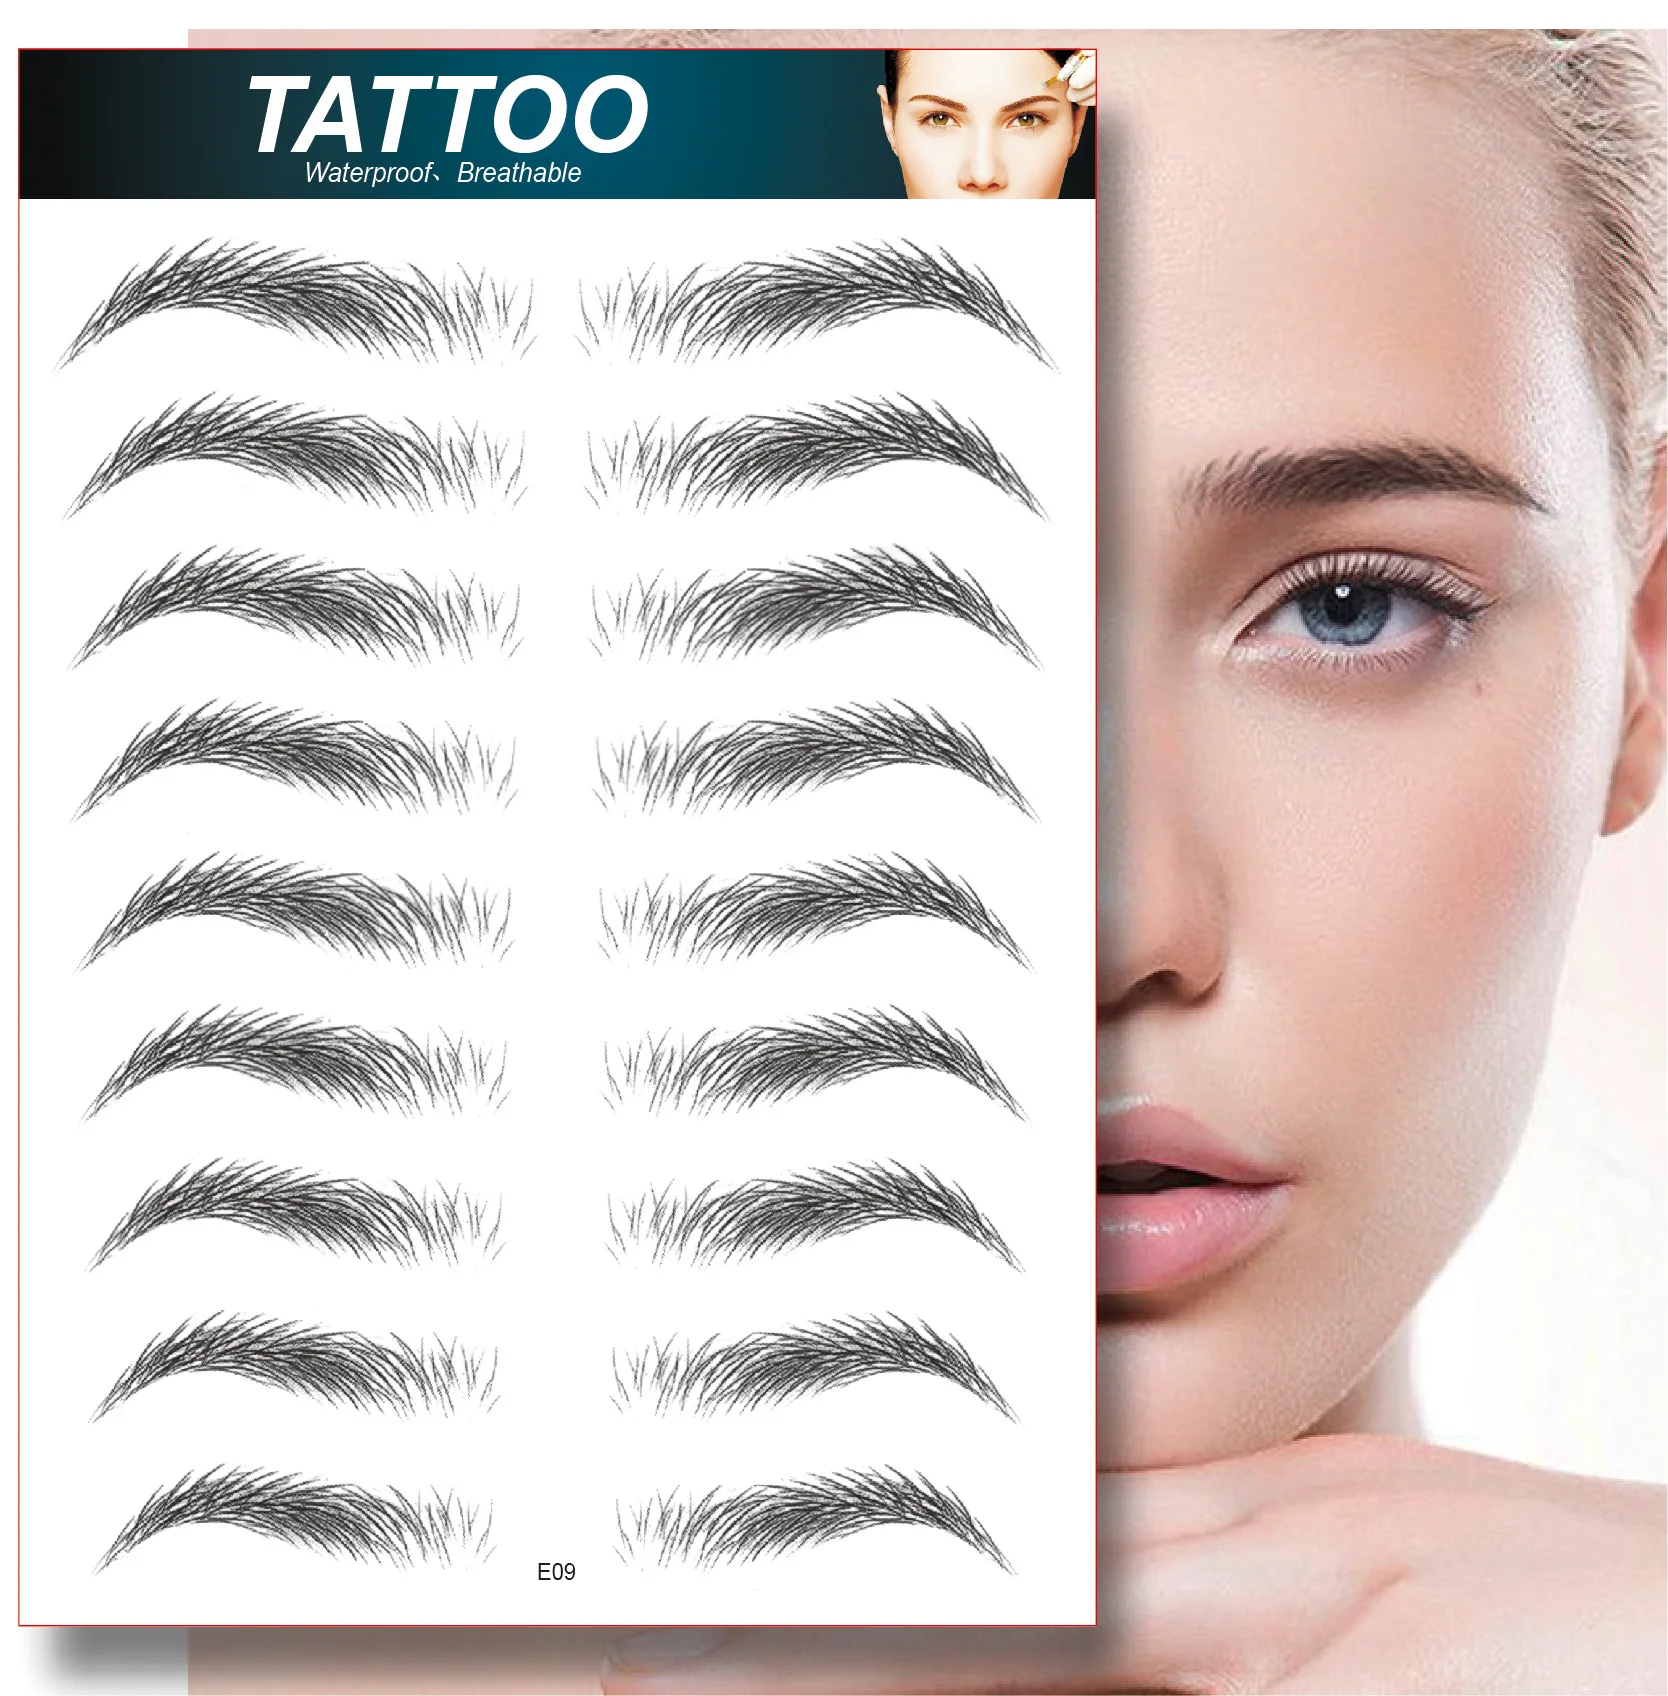 Tattoo Eyebrows / Shine Reduction - YouTube